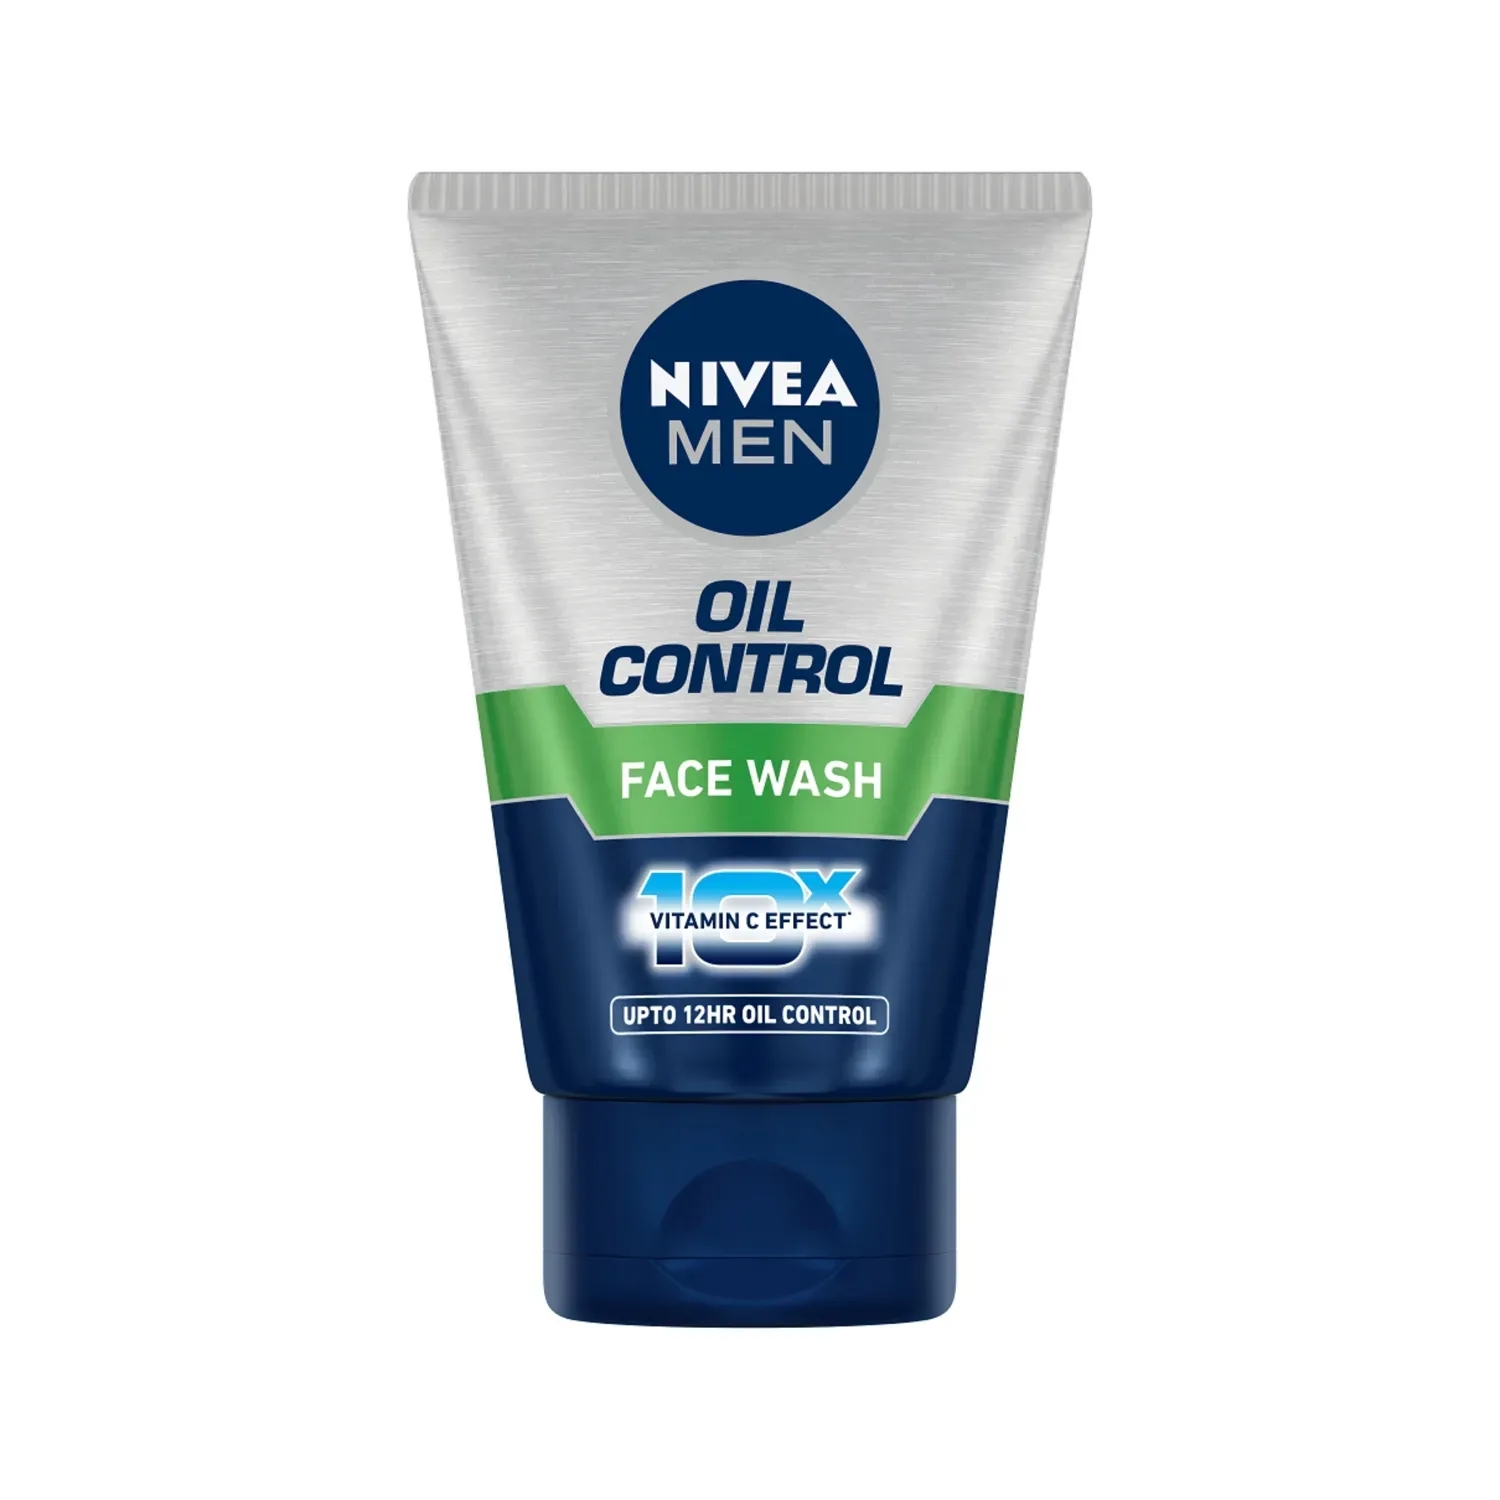 Nivea | Nivea Men Oil Control 10X Vitamin C Effect Face Wash (100g)